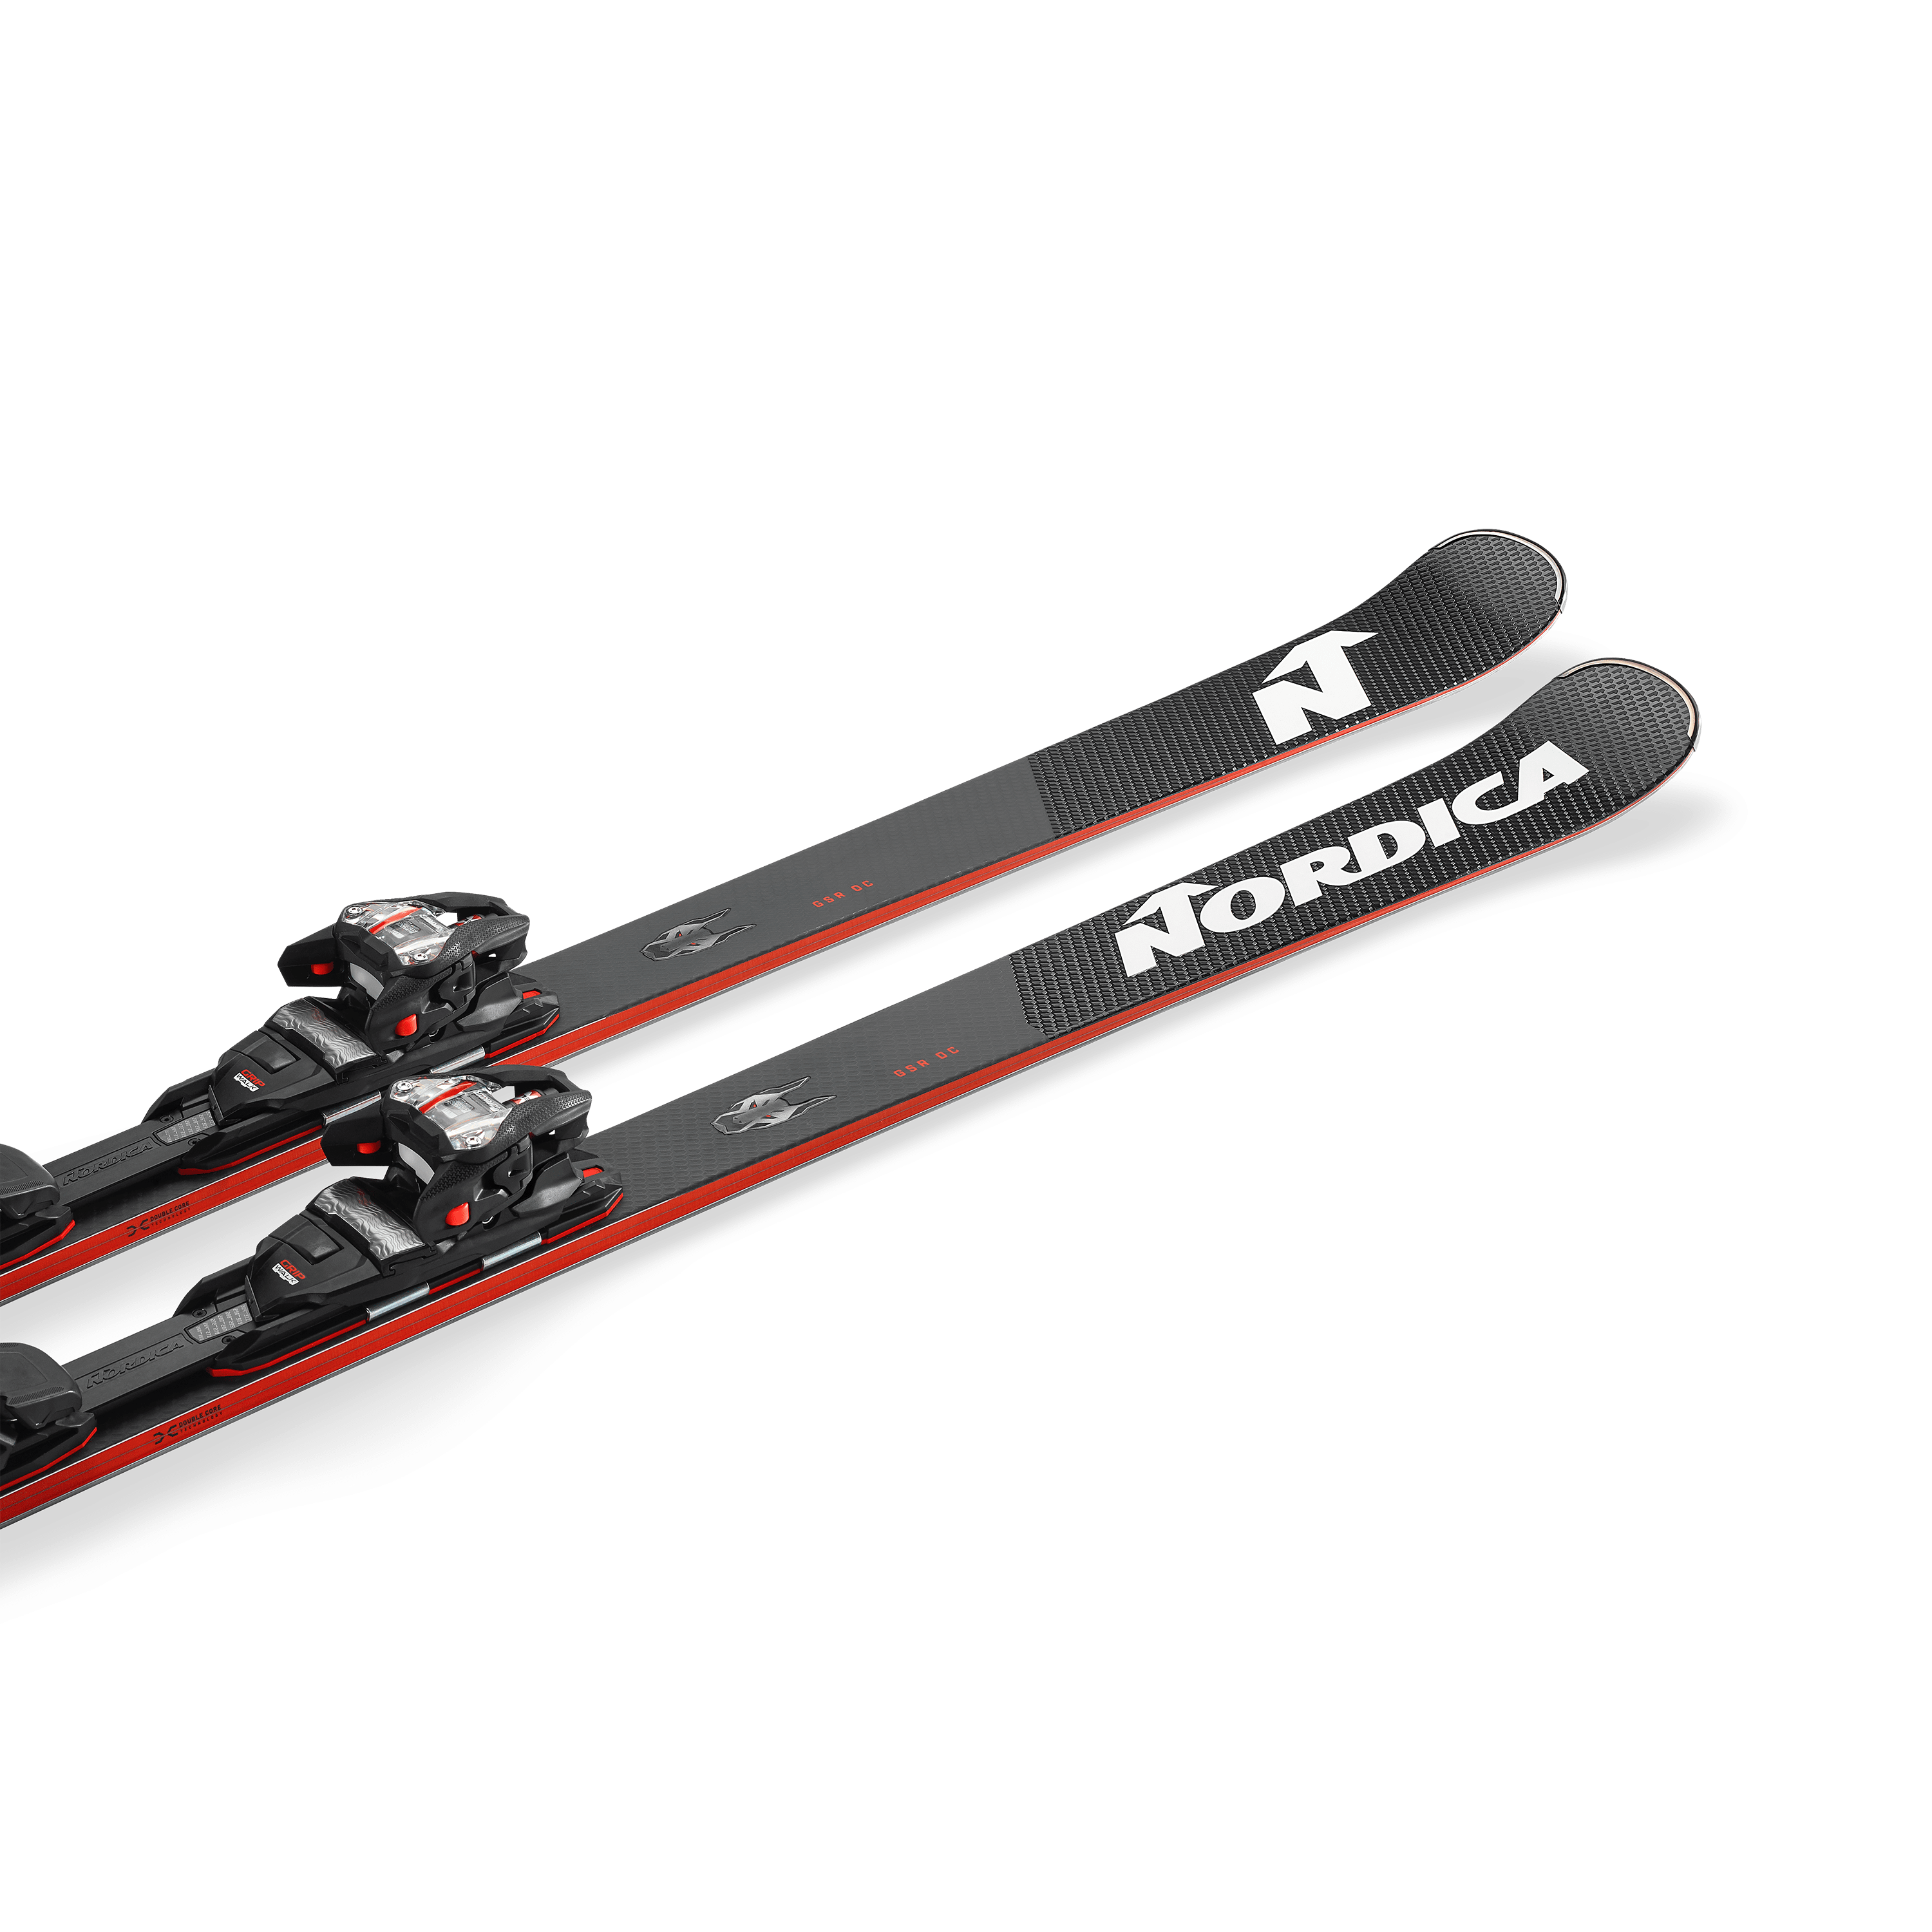 Picture of the Nordica Dobermann gsr dc fdt skis.